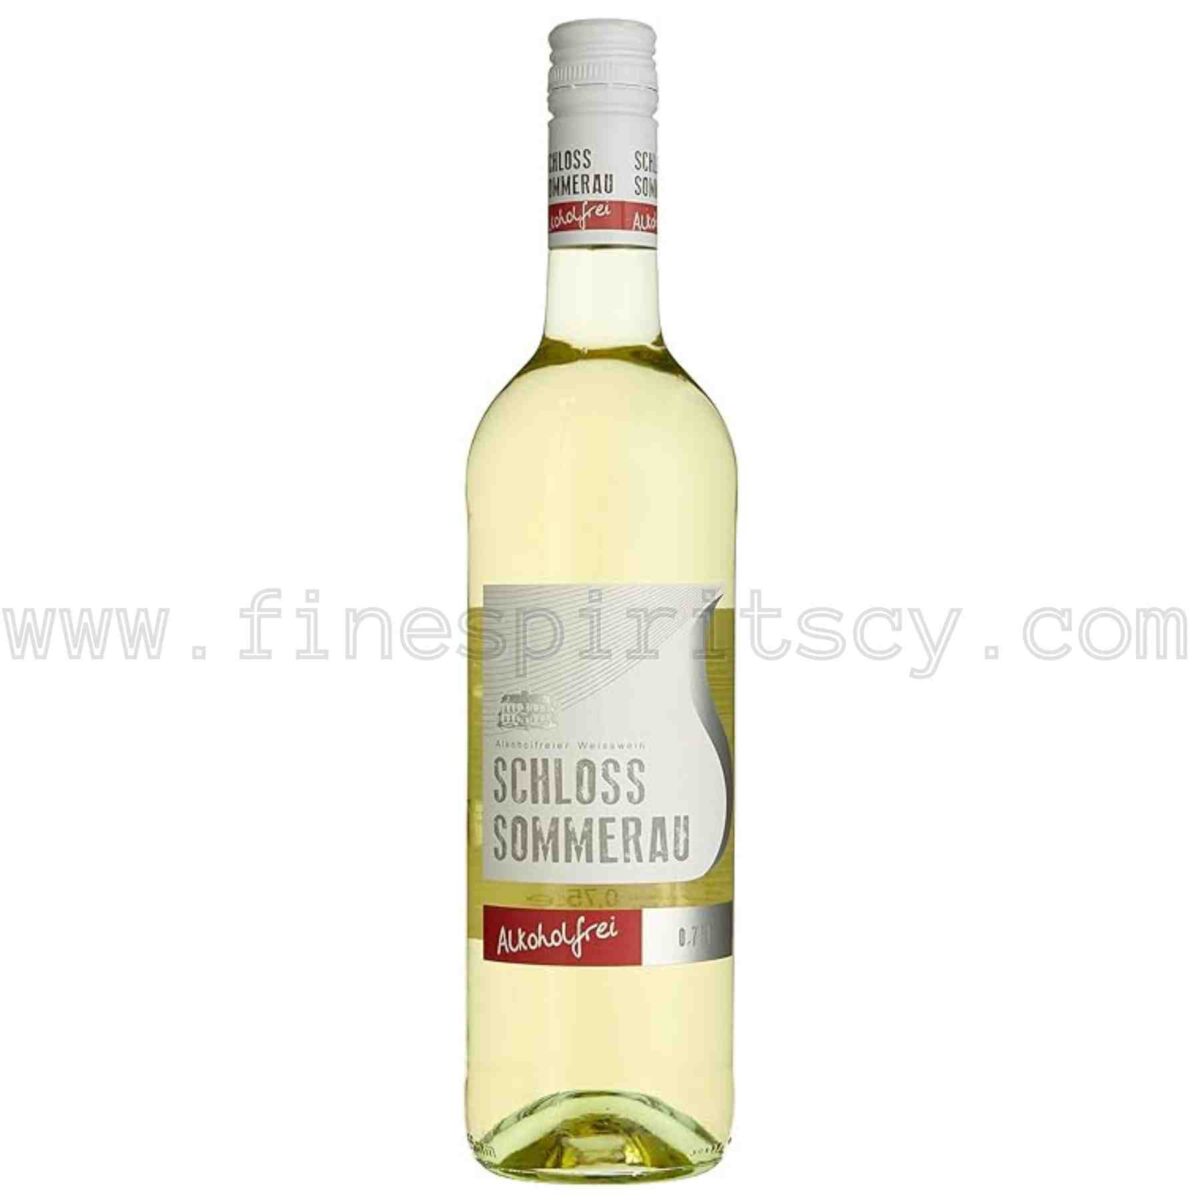 Schloss Sommerau Alkoholfrei Alcohol Free White Wine 750ml 75cl 0.75L